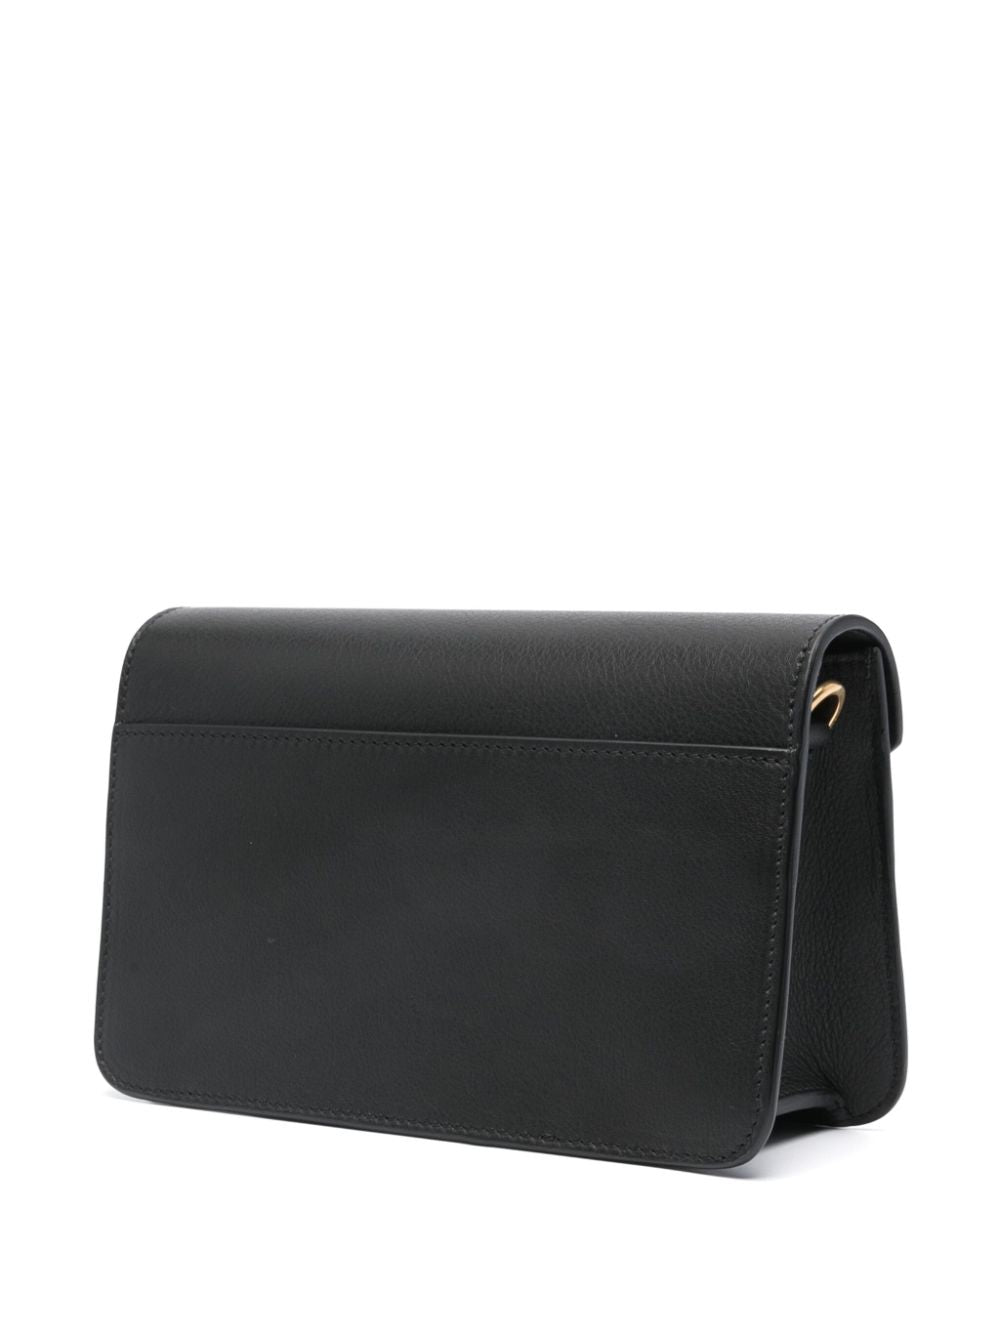 Shop Bally Luxurious Black Leather Crossbody Handbag For Women